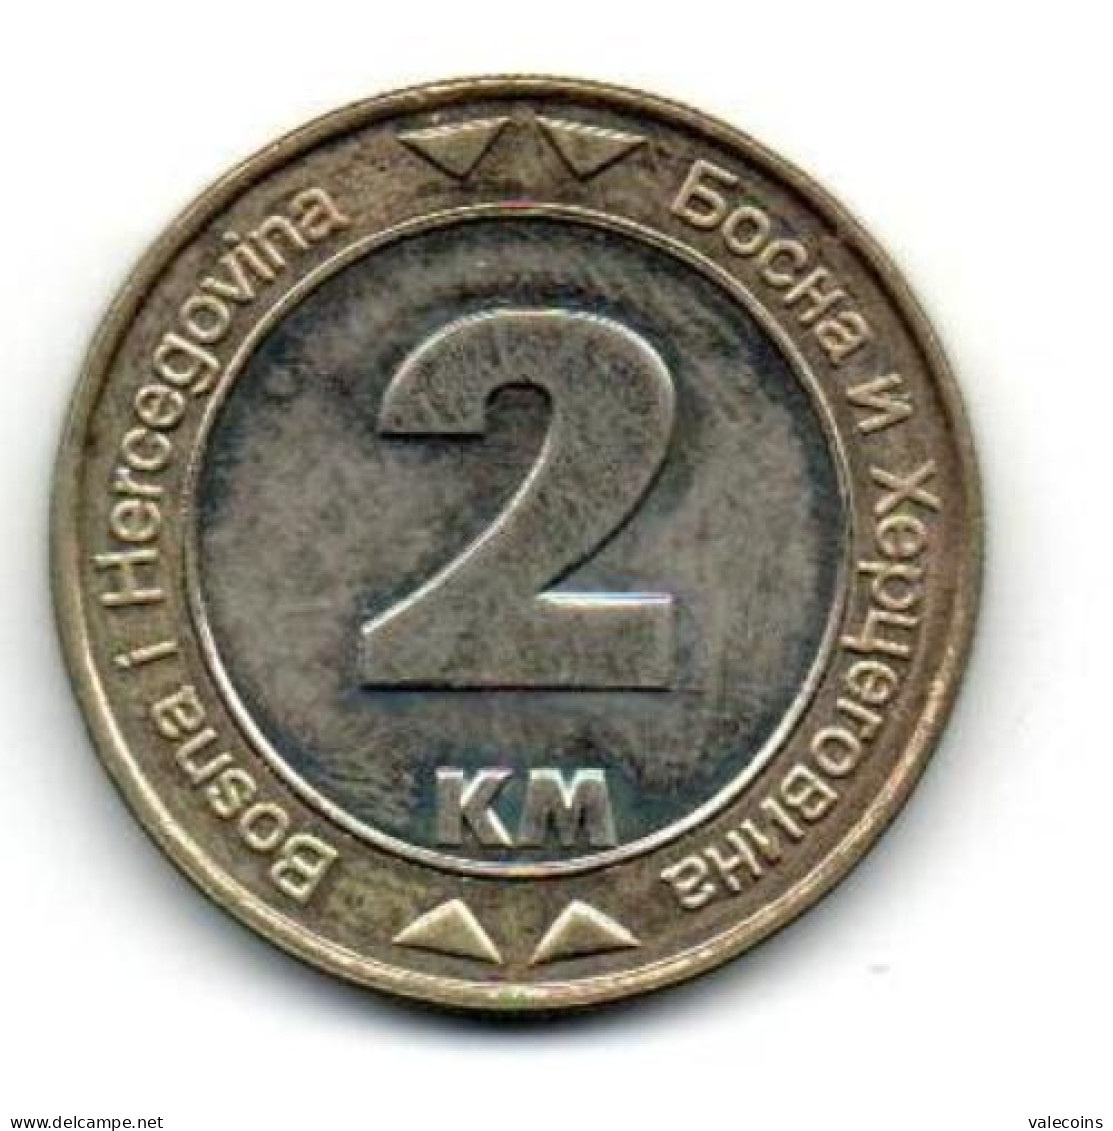 BOSNIA HERZEGOVINA - 2008 - 2 Marka - KM 119 AUNC Coin - Bosnia And Herzegovina